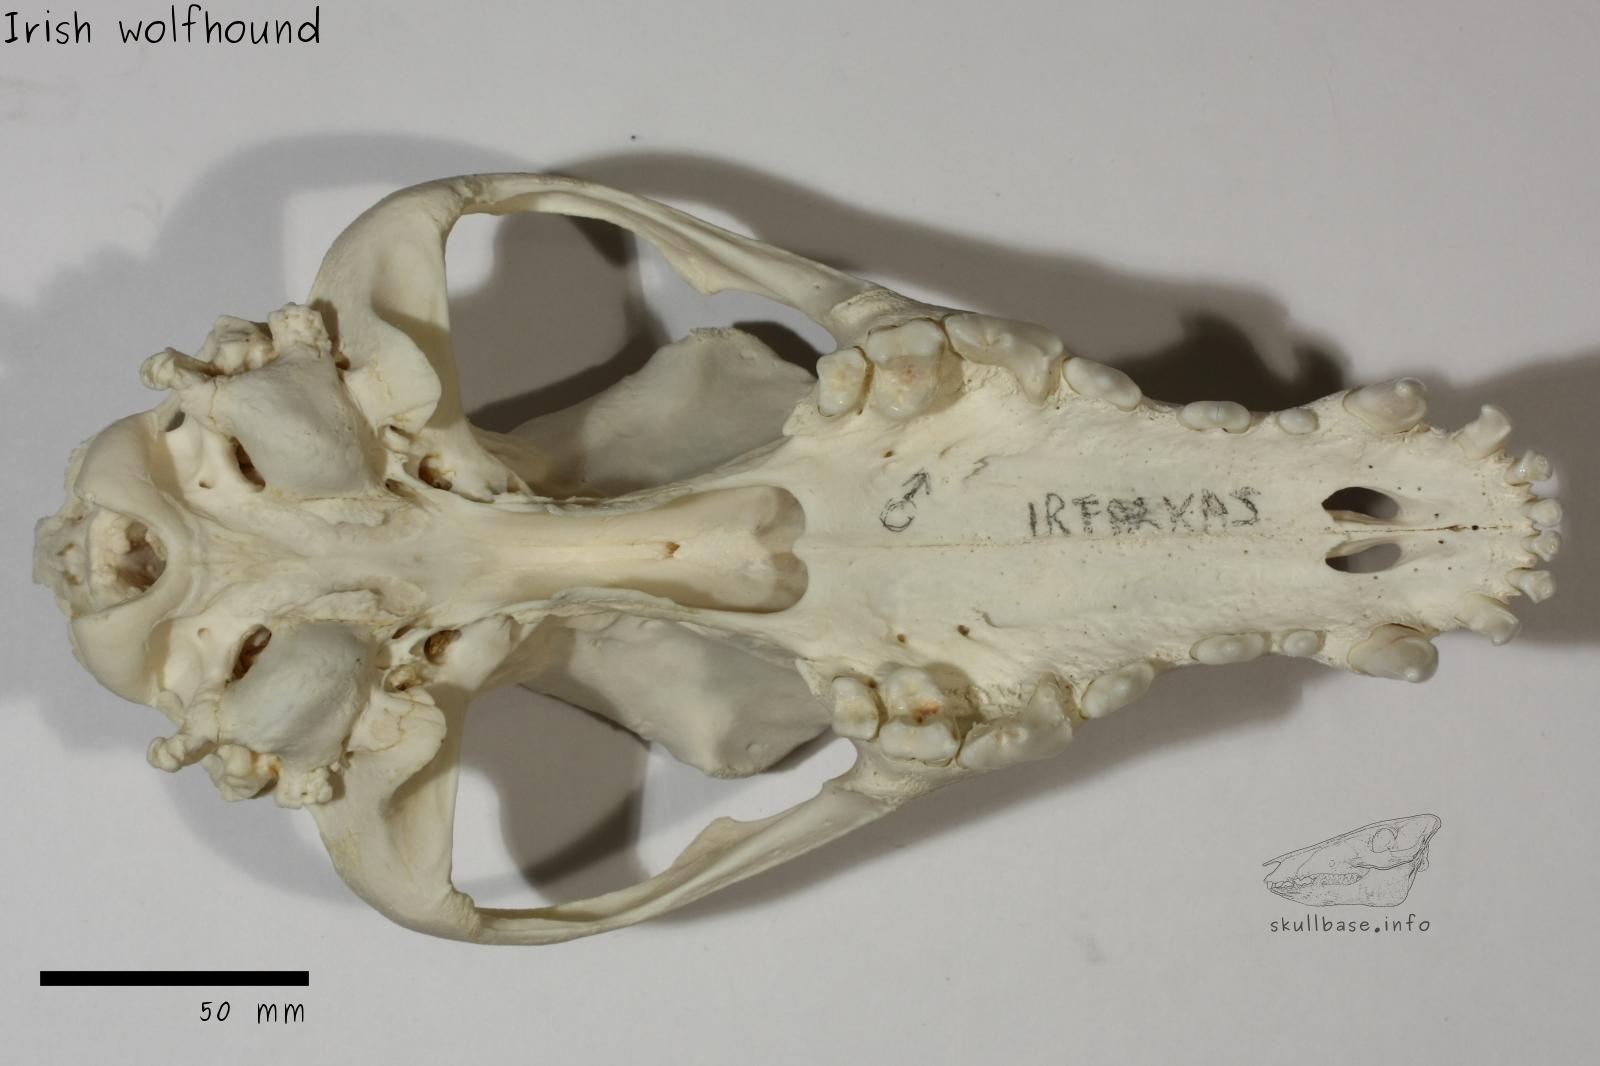 Irish wolfhound (Canis lupus familiaris) skull ventral view